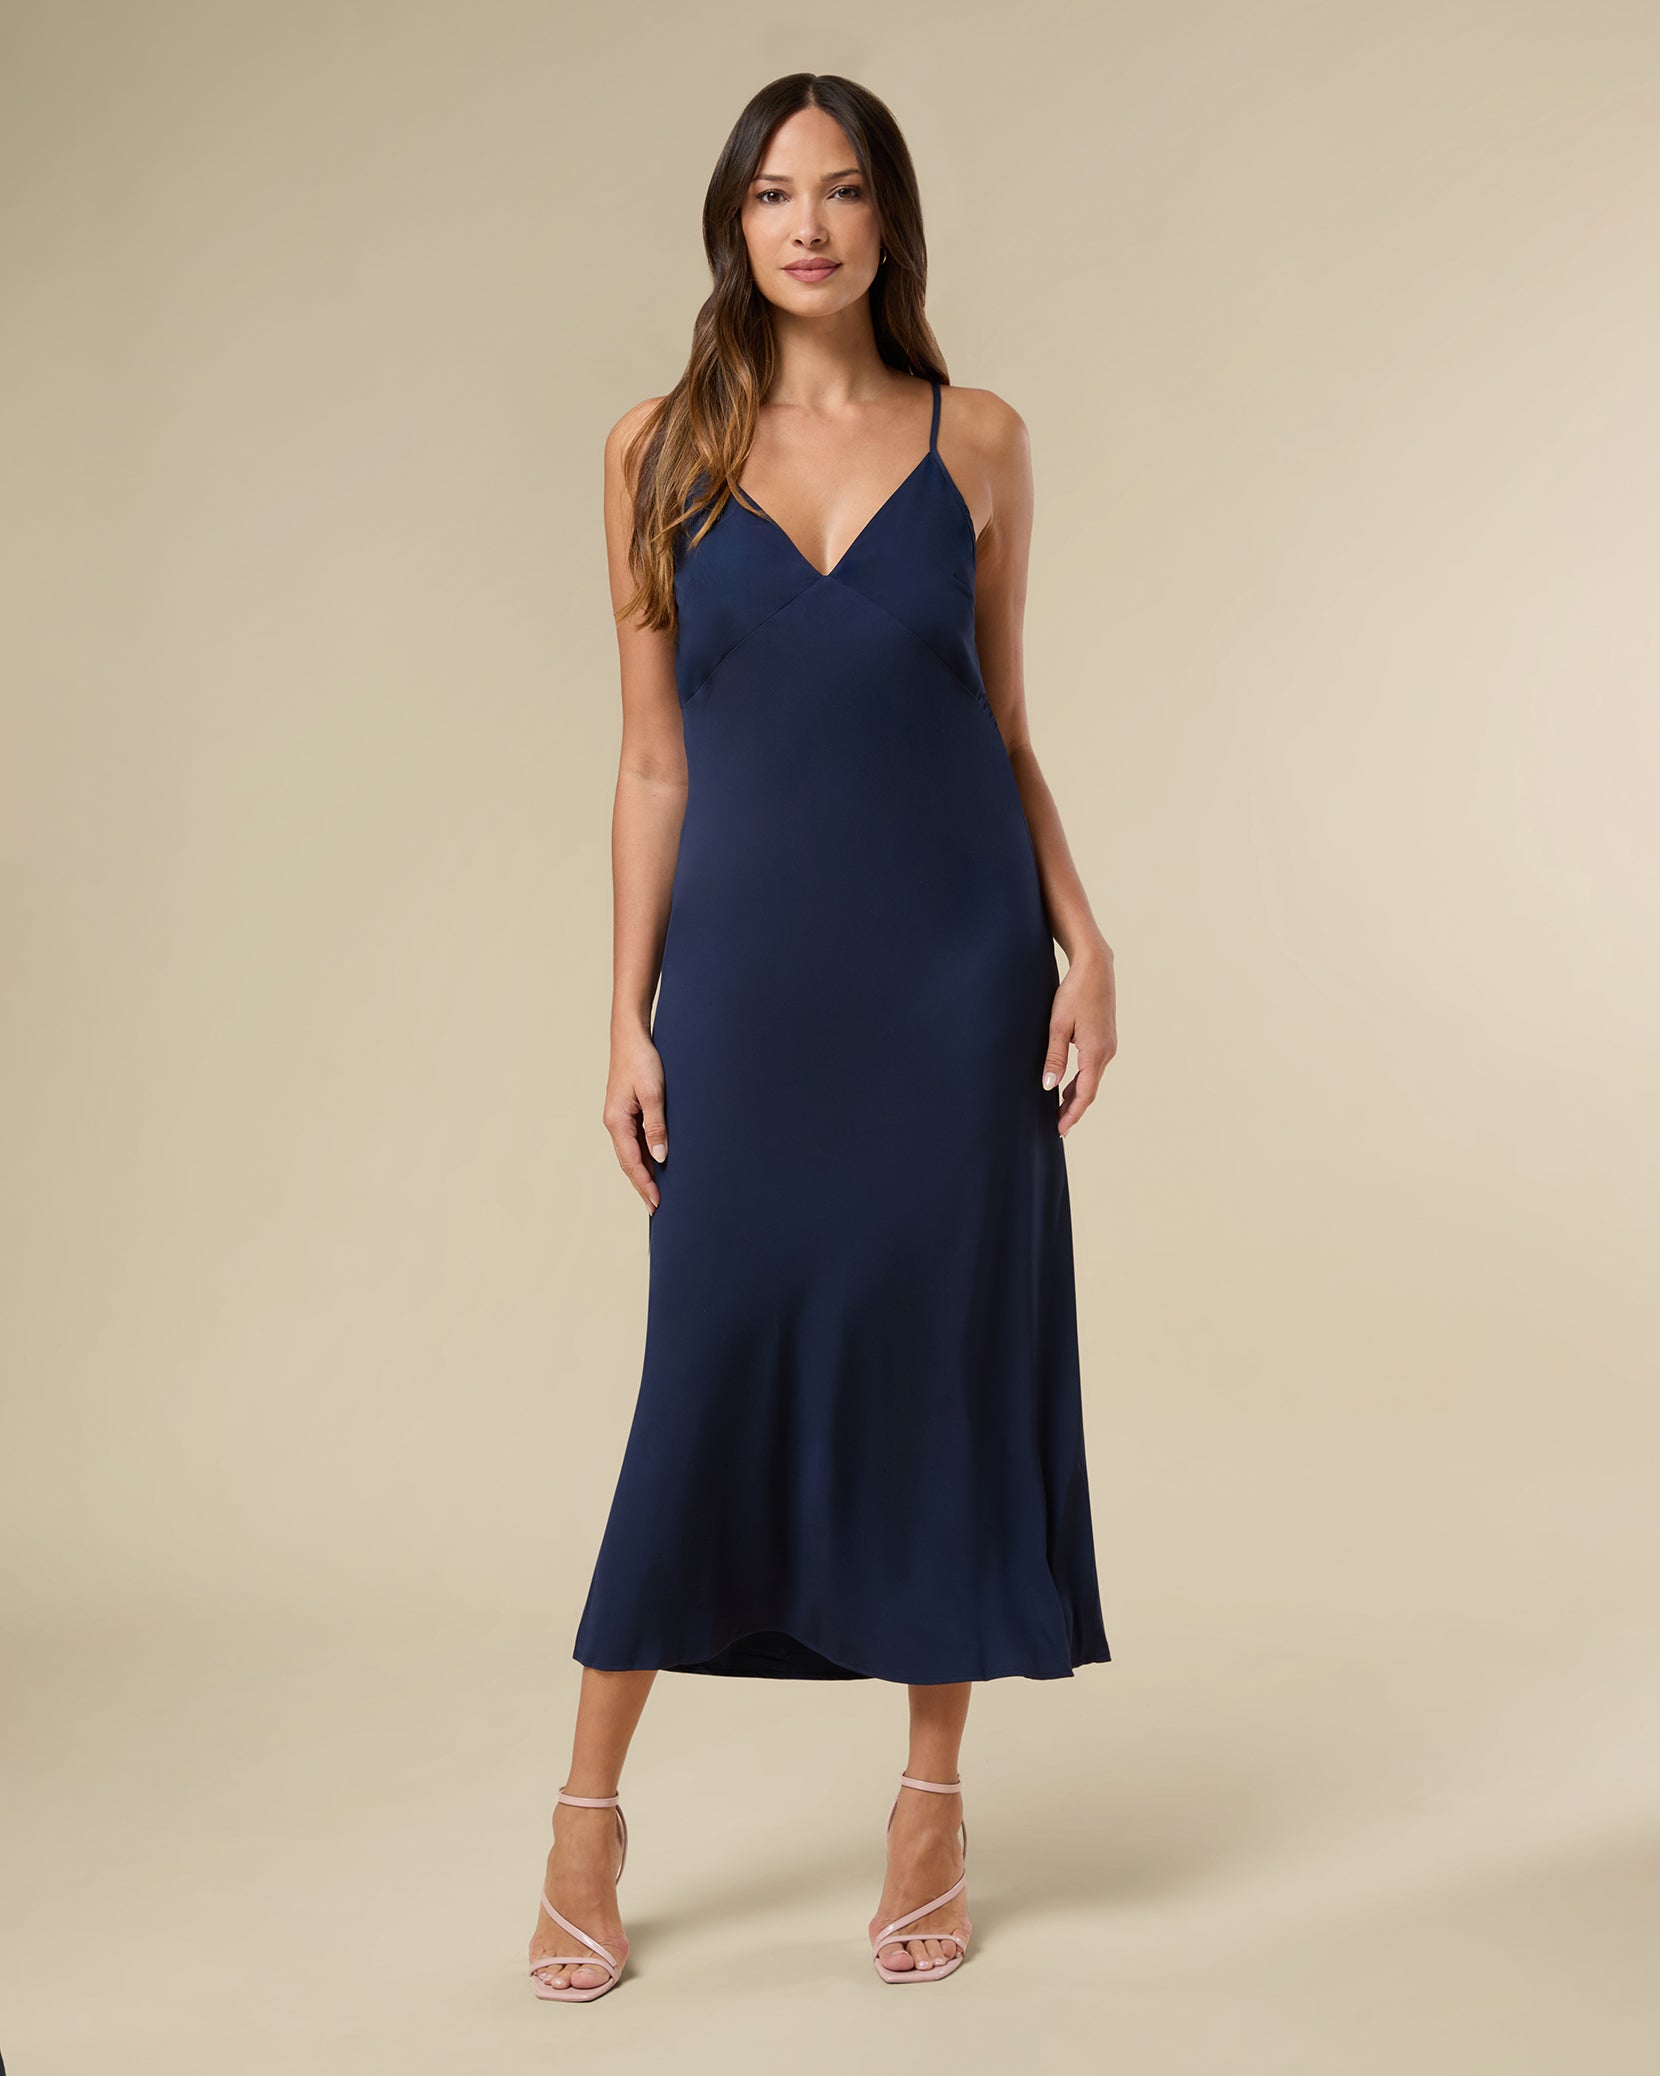 [Dress Blue] - Model